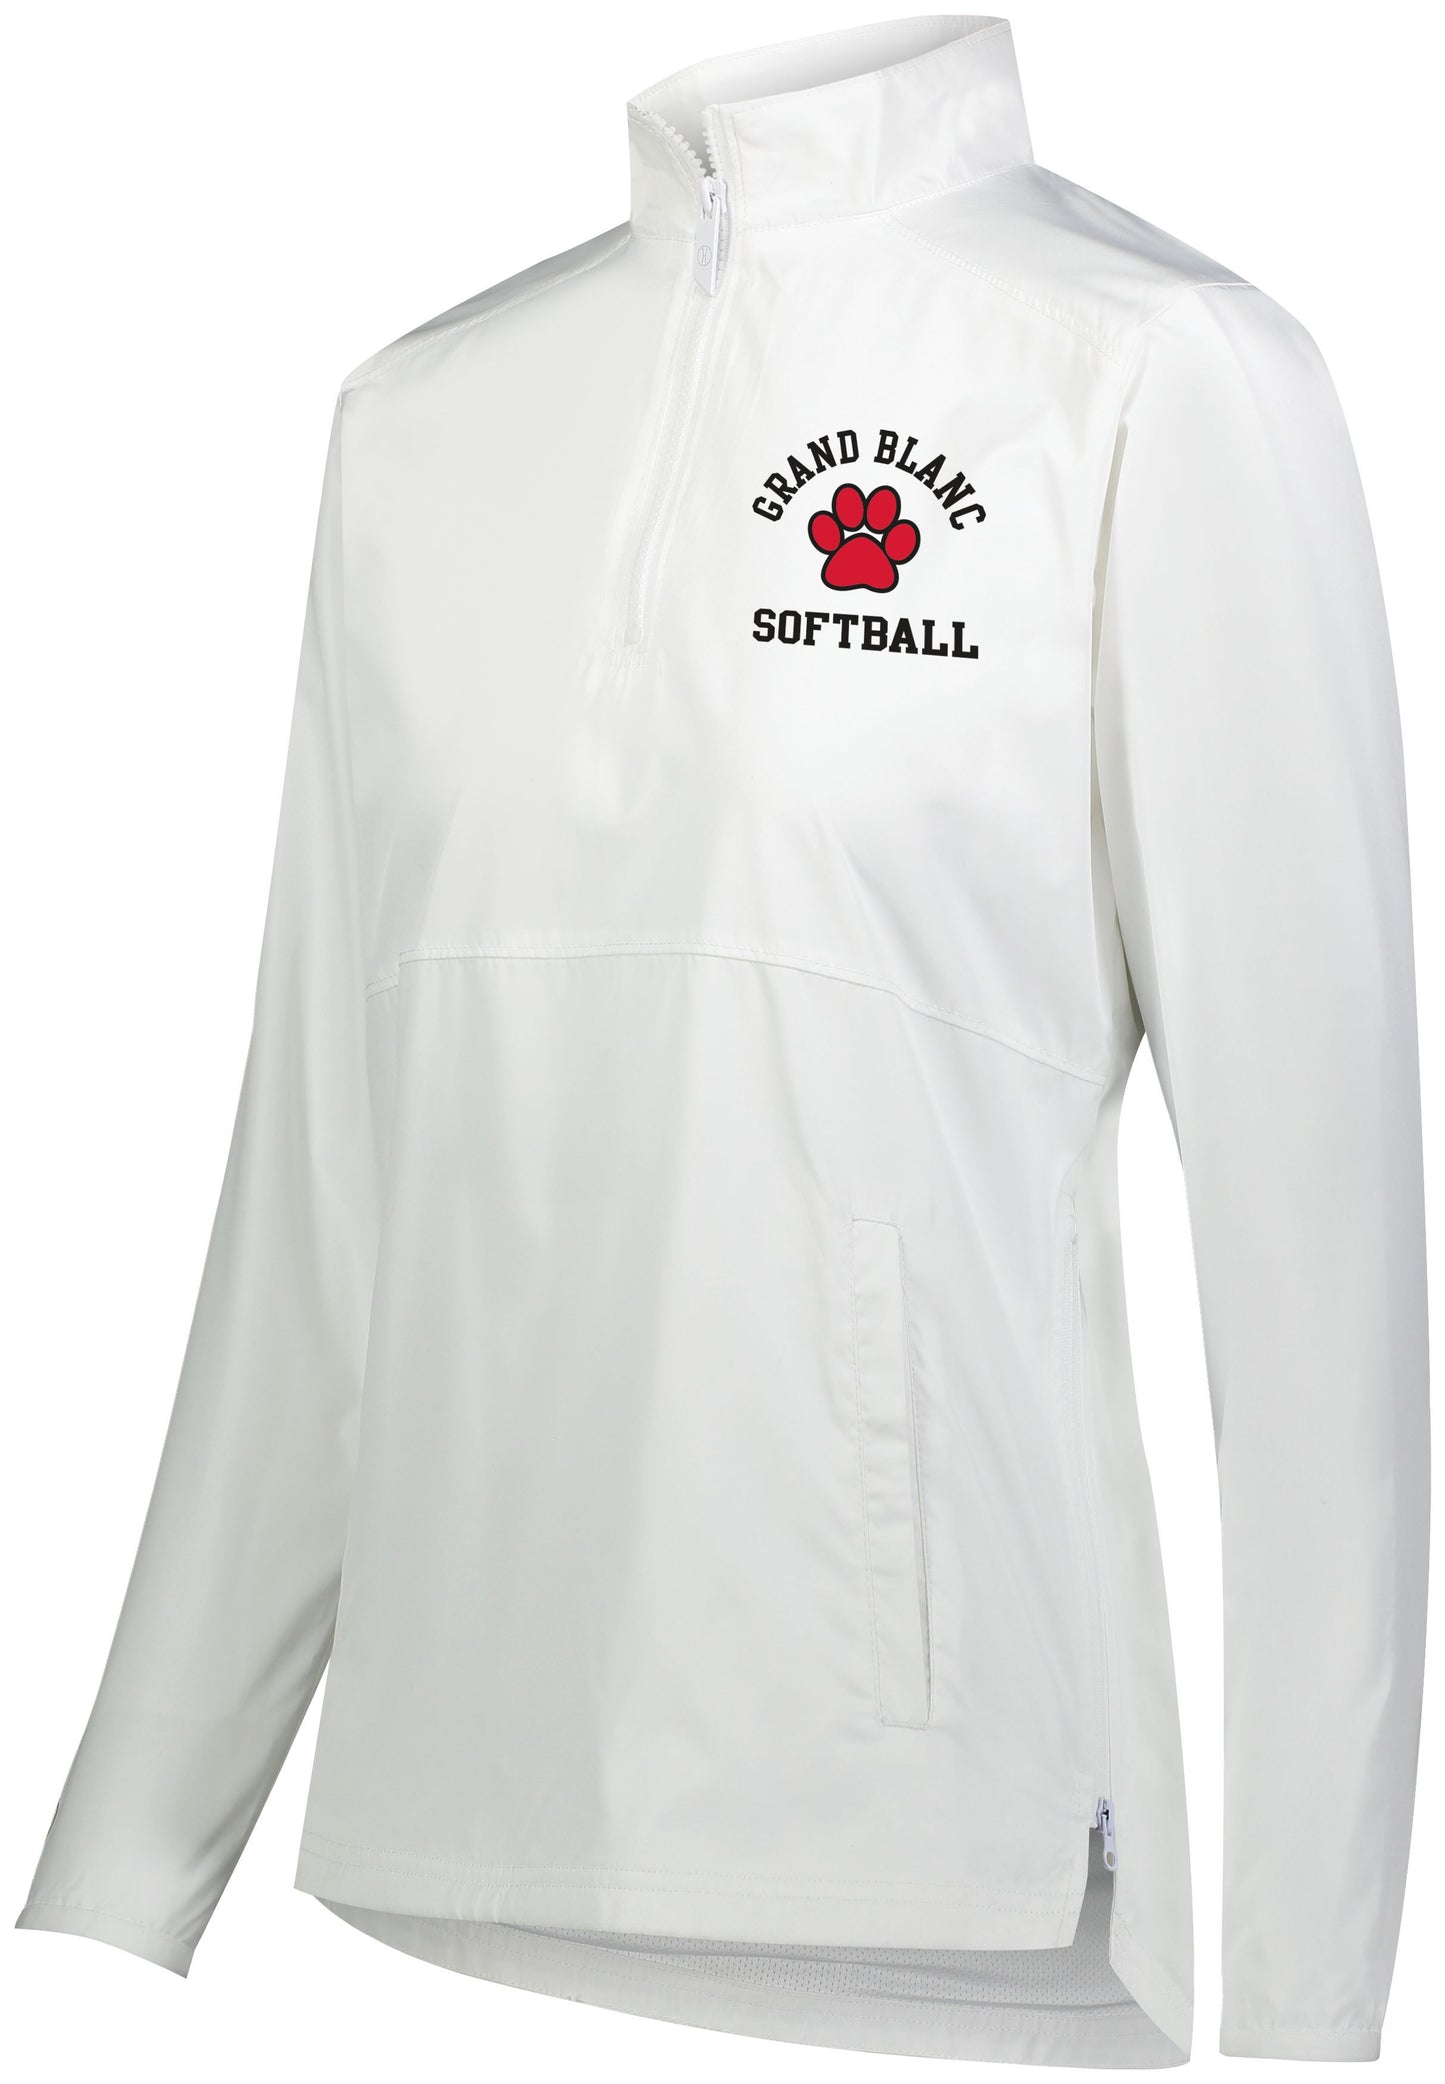 Grand Blanc Softball SeriesX Pullover